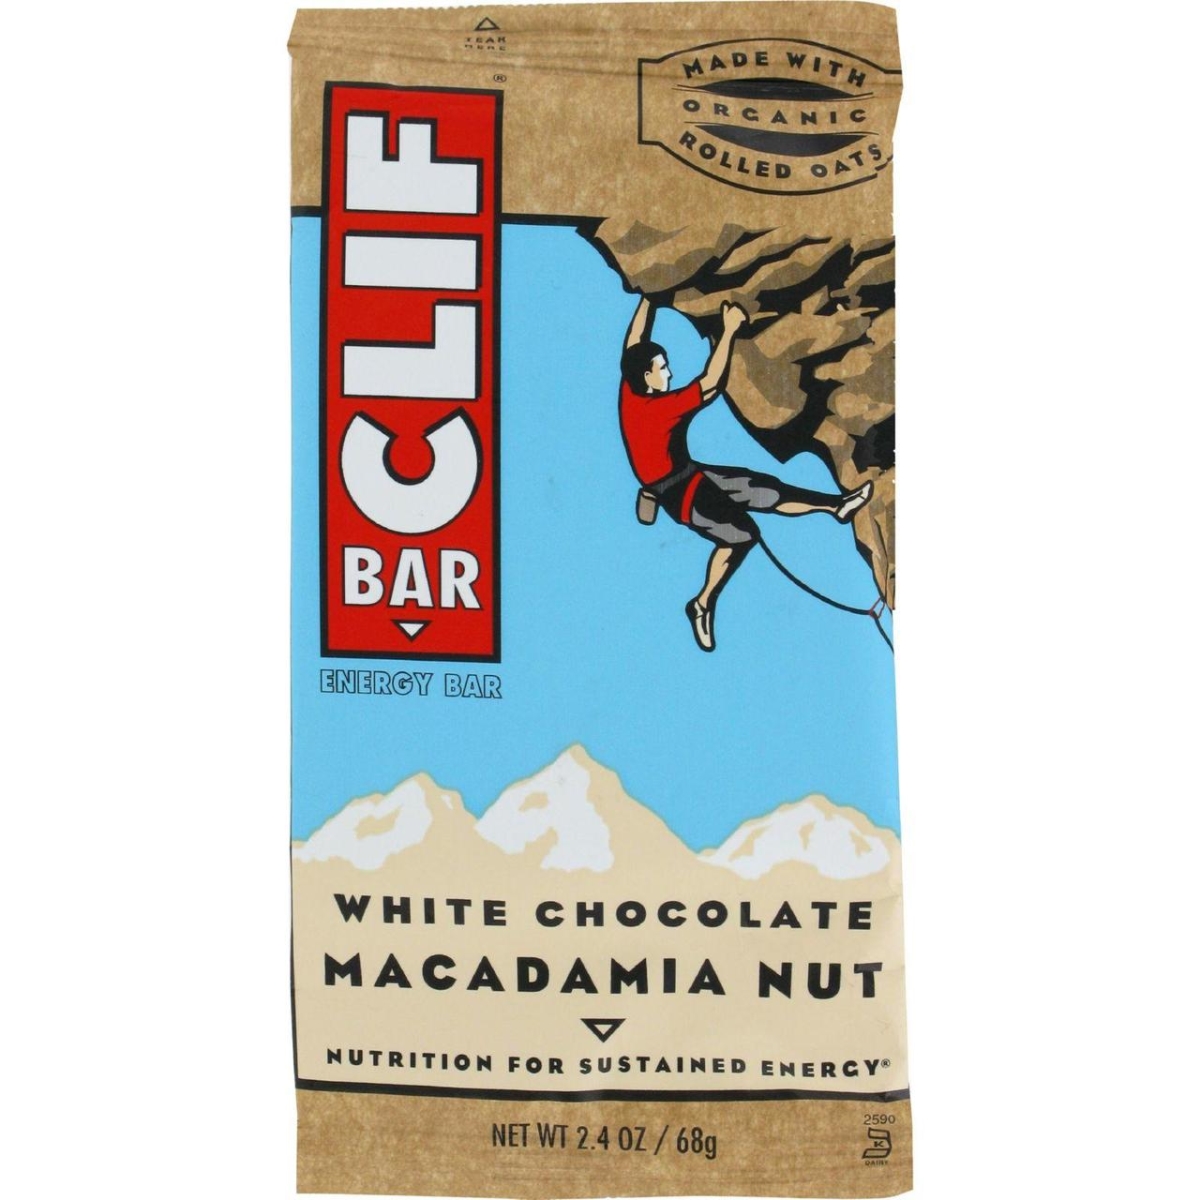 Clif Bar Hg0653816 2.4 Oz Organic White Chocolate Macadamia Nut - Case Of 12